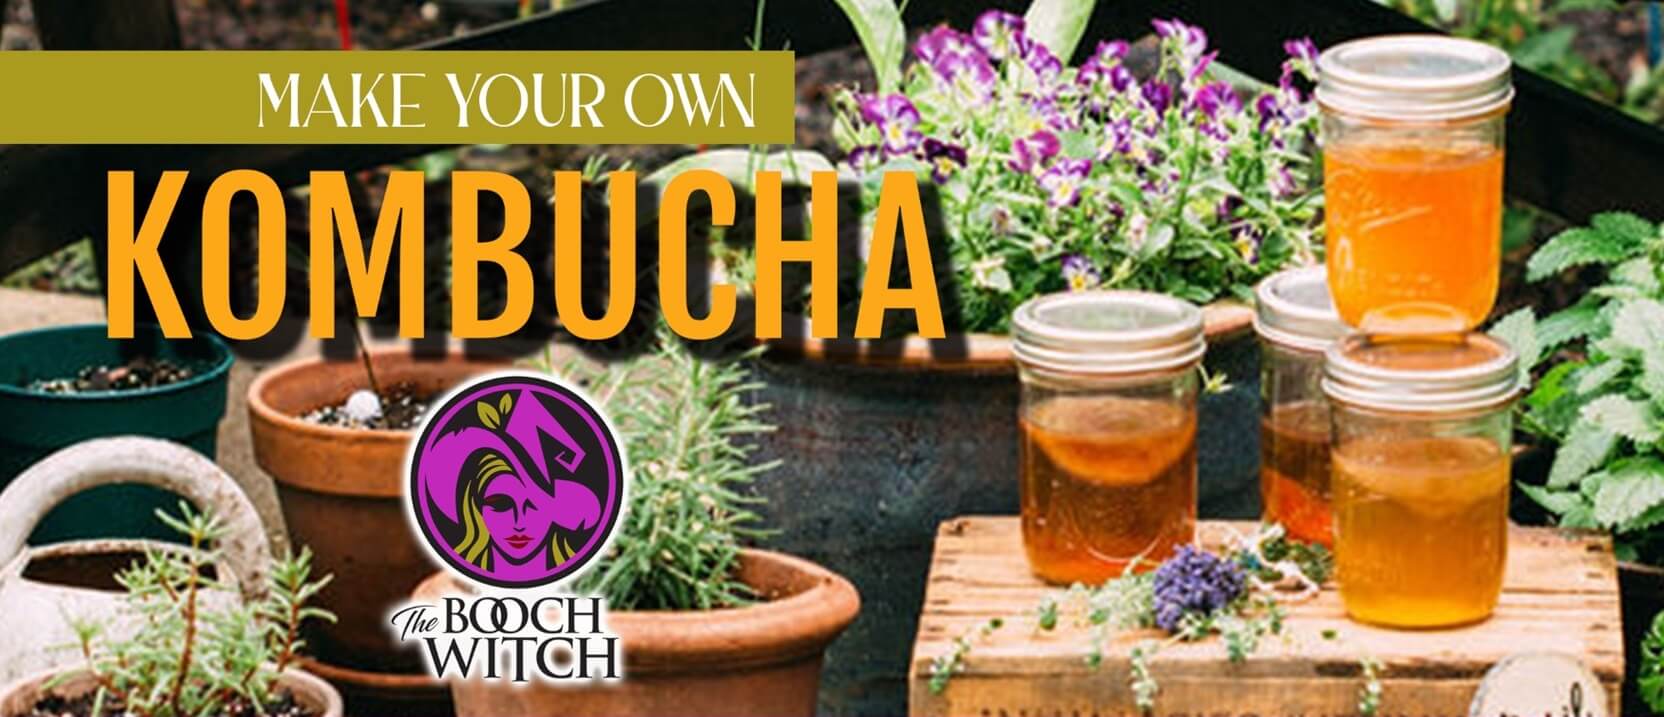 Learn to Make Kombucha at Home banner